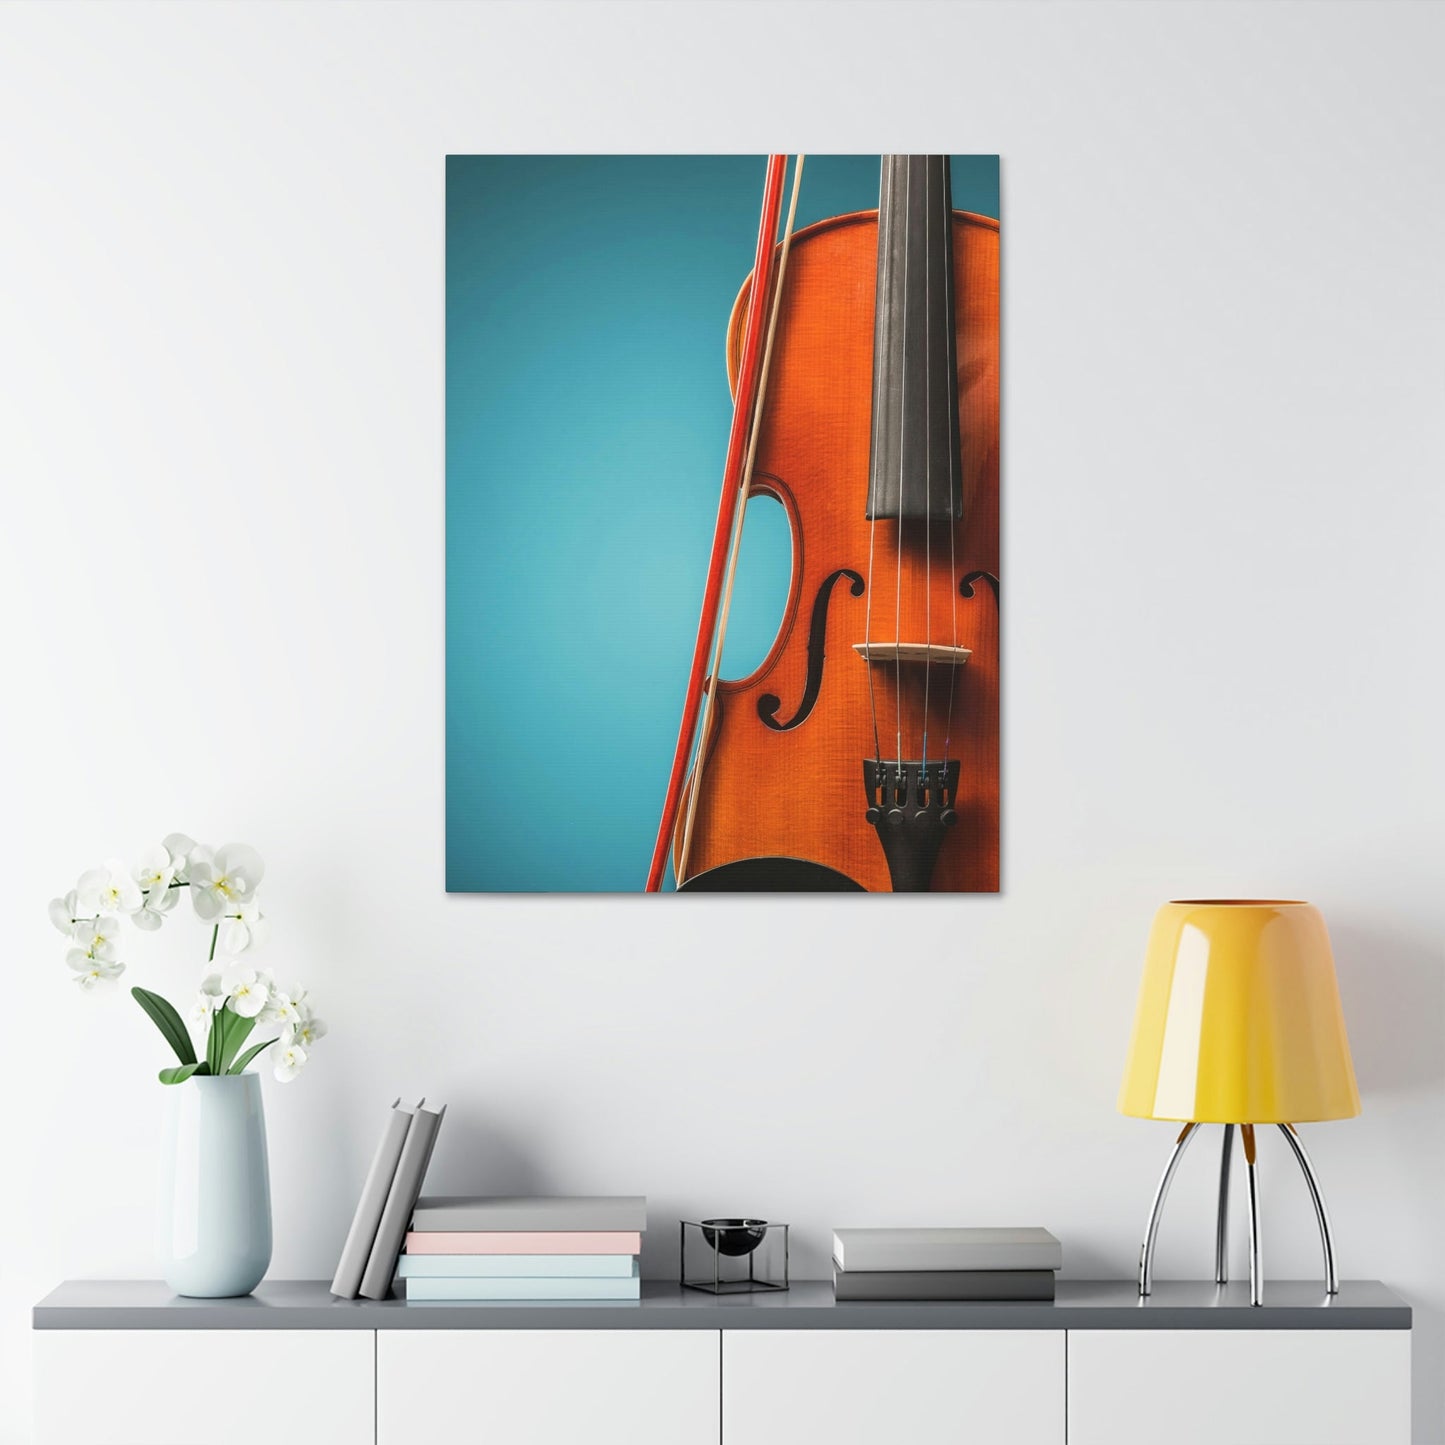 Harmonious Hues: Cello Wall Art on Canvas